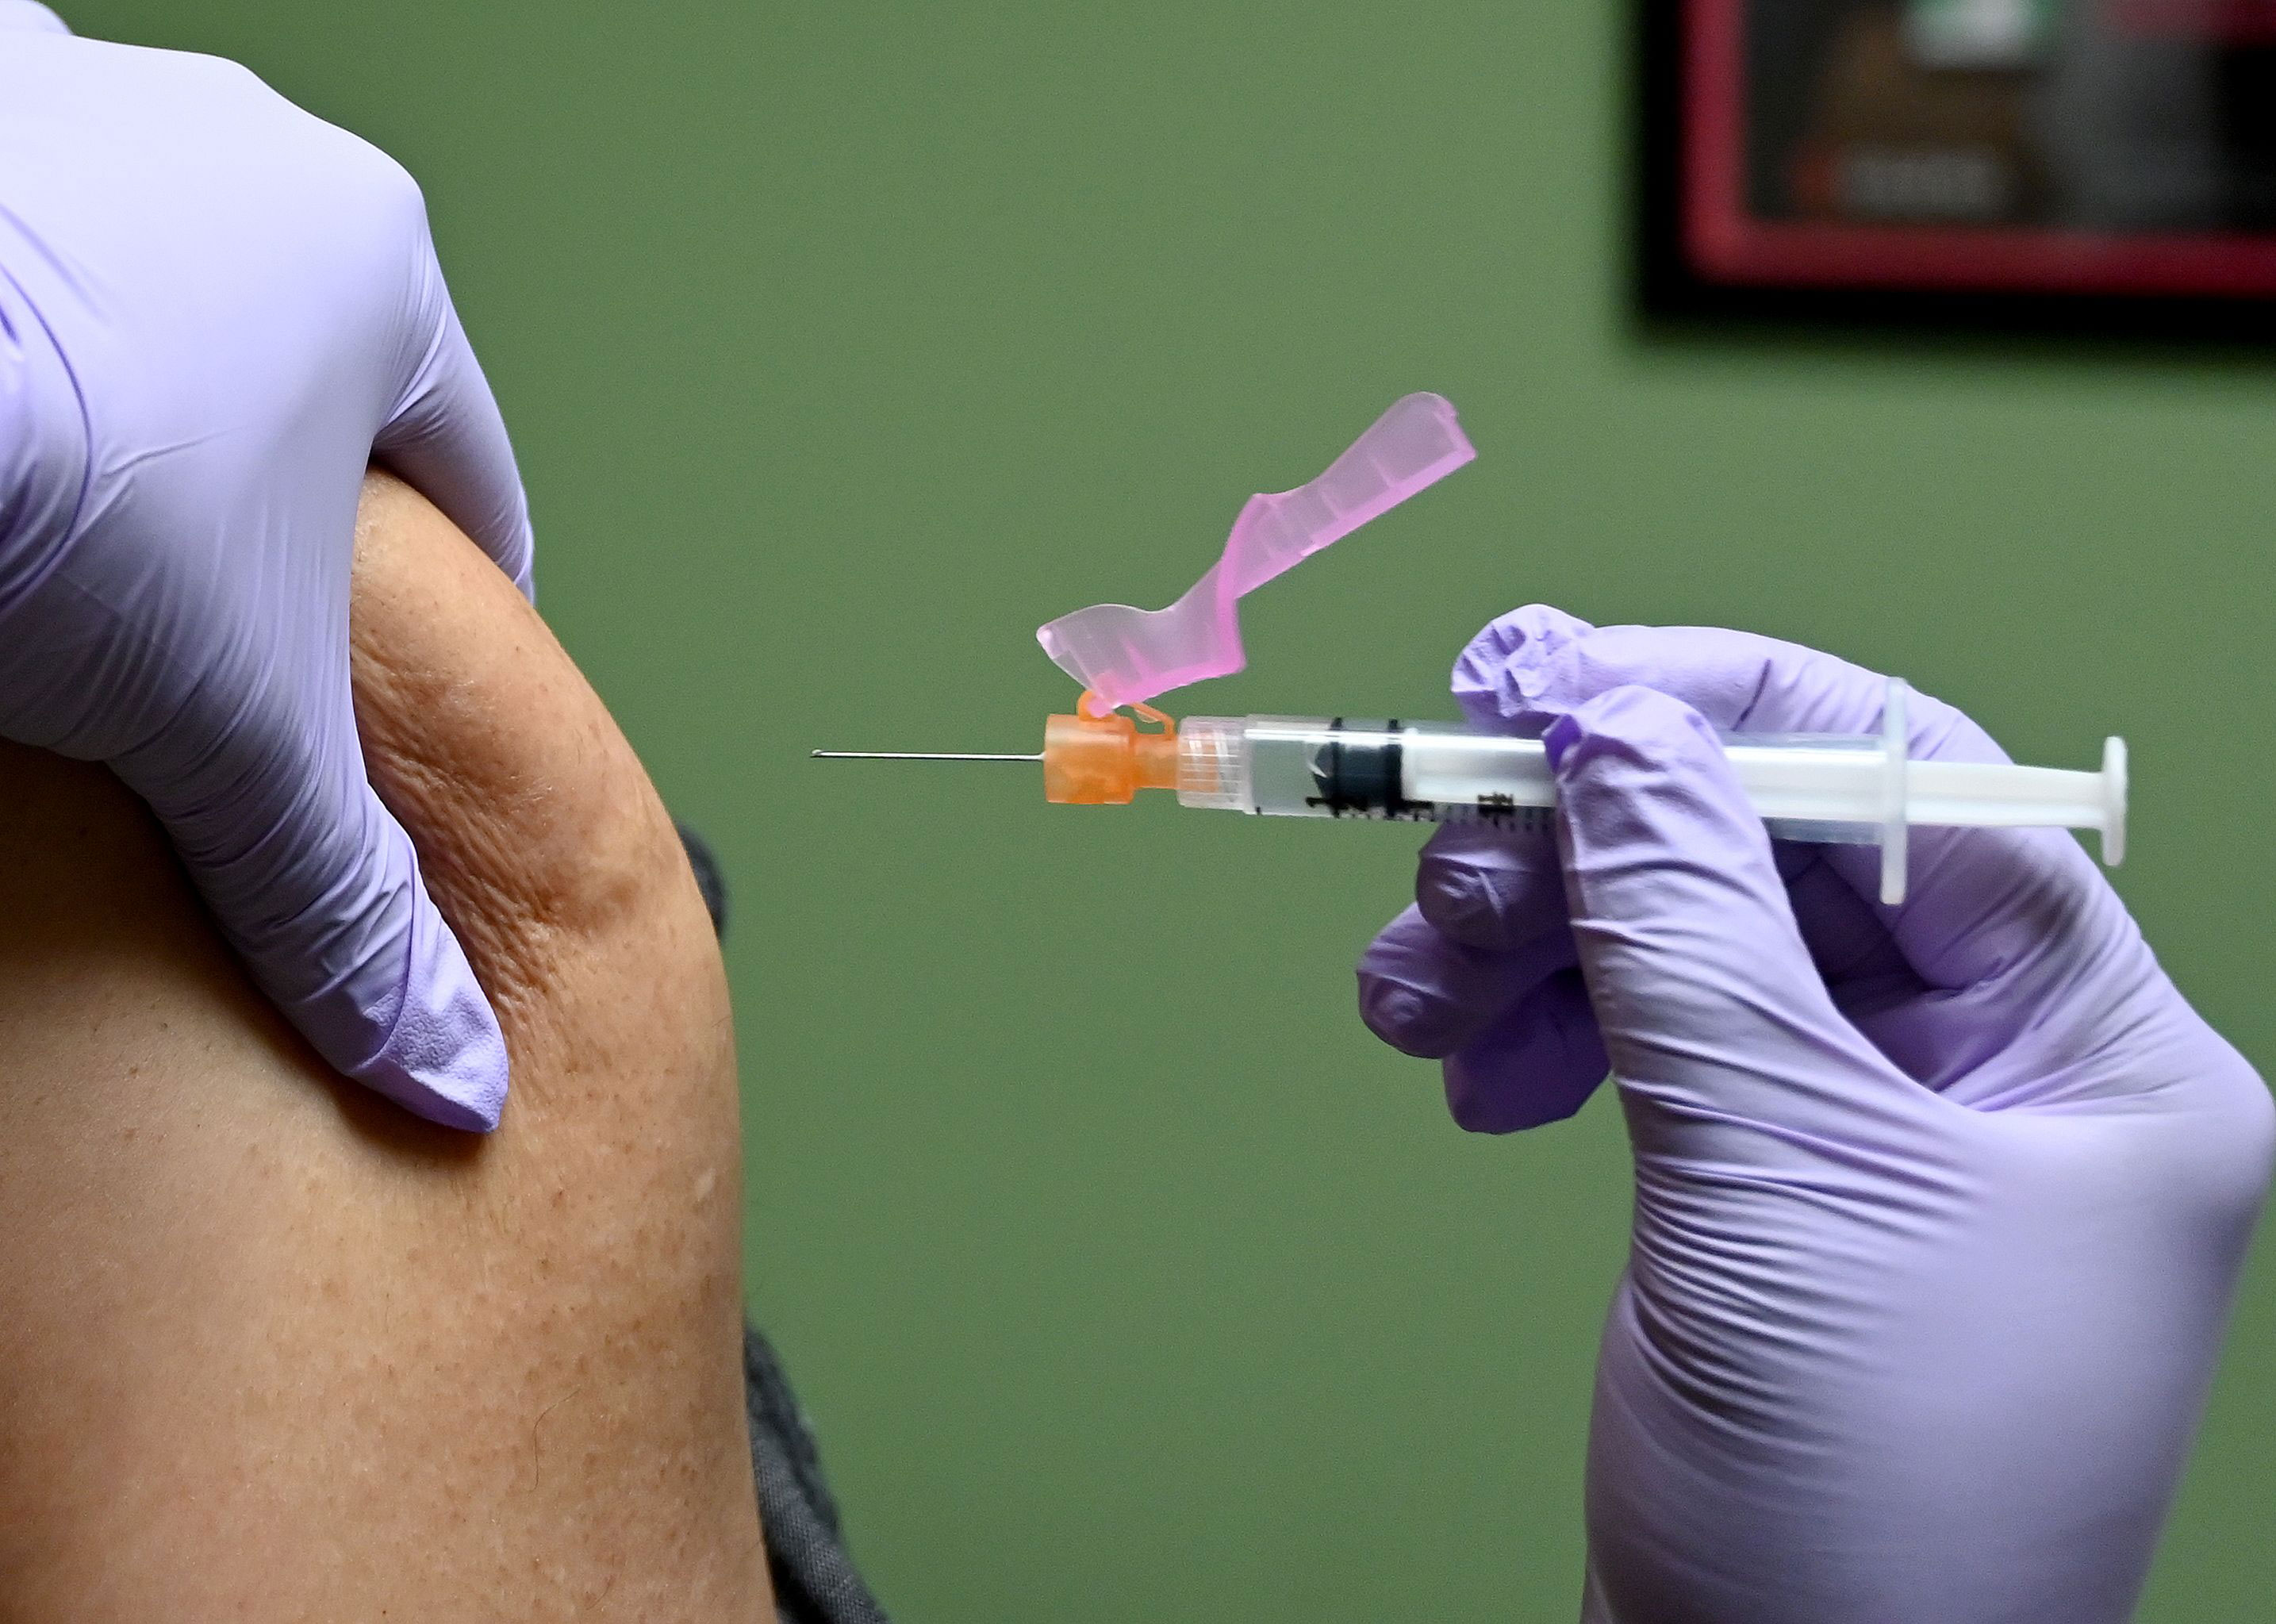 A man gets a flu shot at a health facility in Washington on January 31.